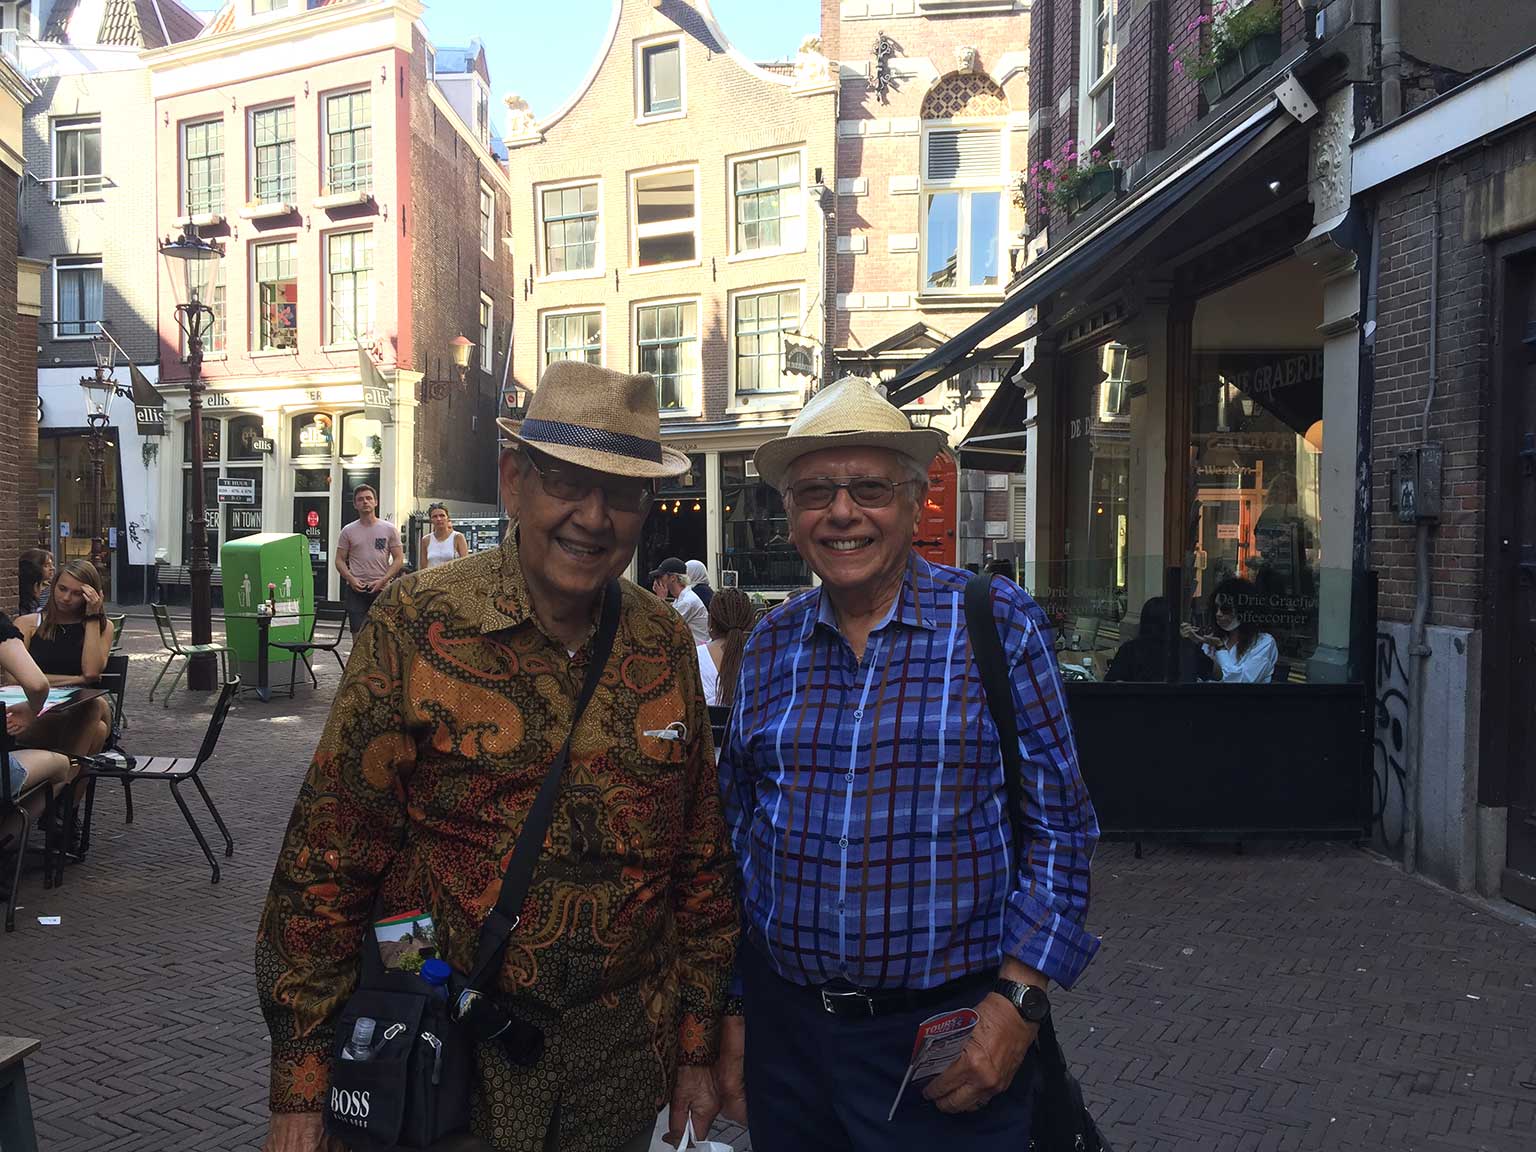 Two happy tourists in front of De Drie Fleschjes on Gravenstraat, Amsterdam